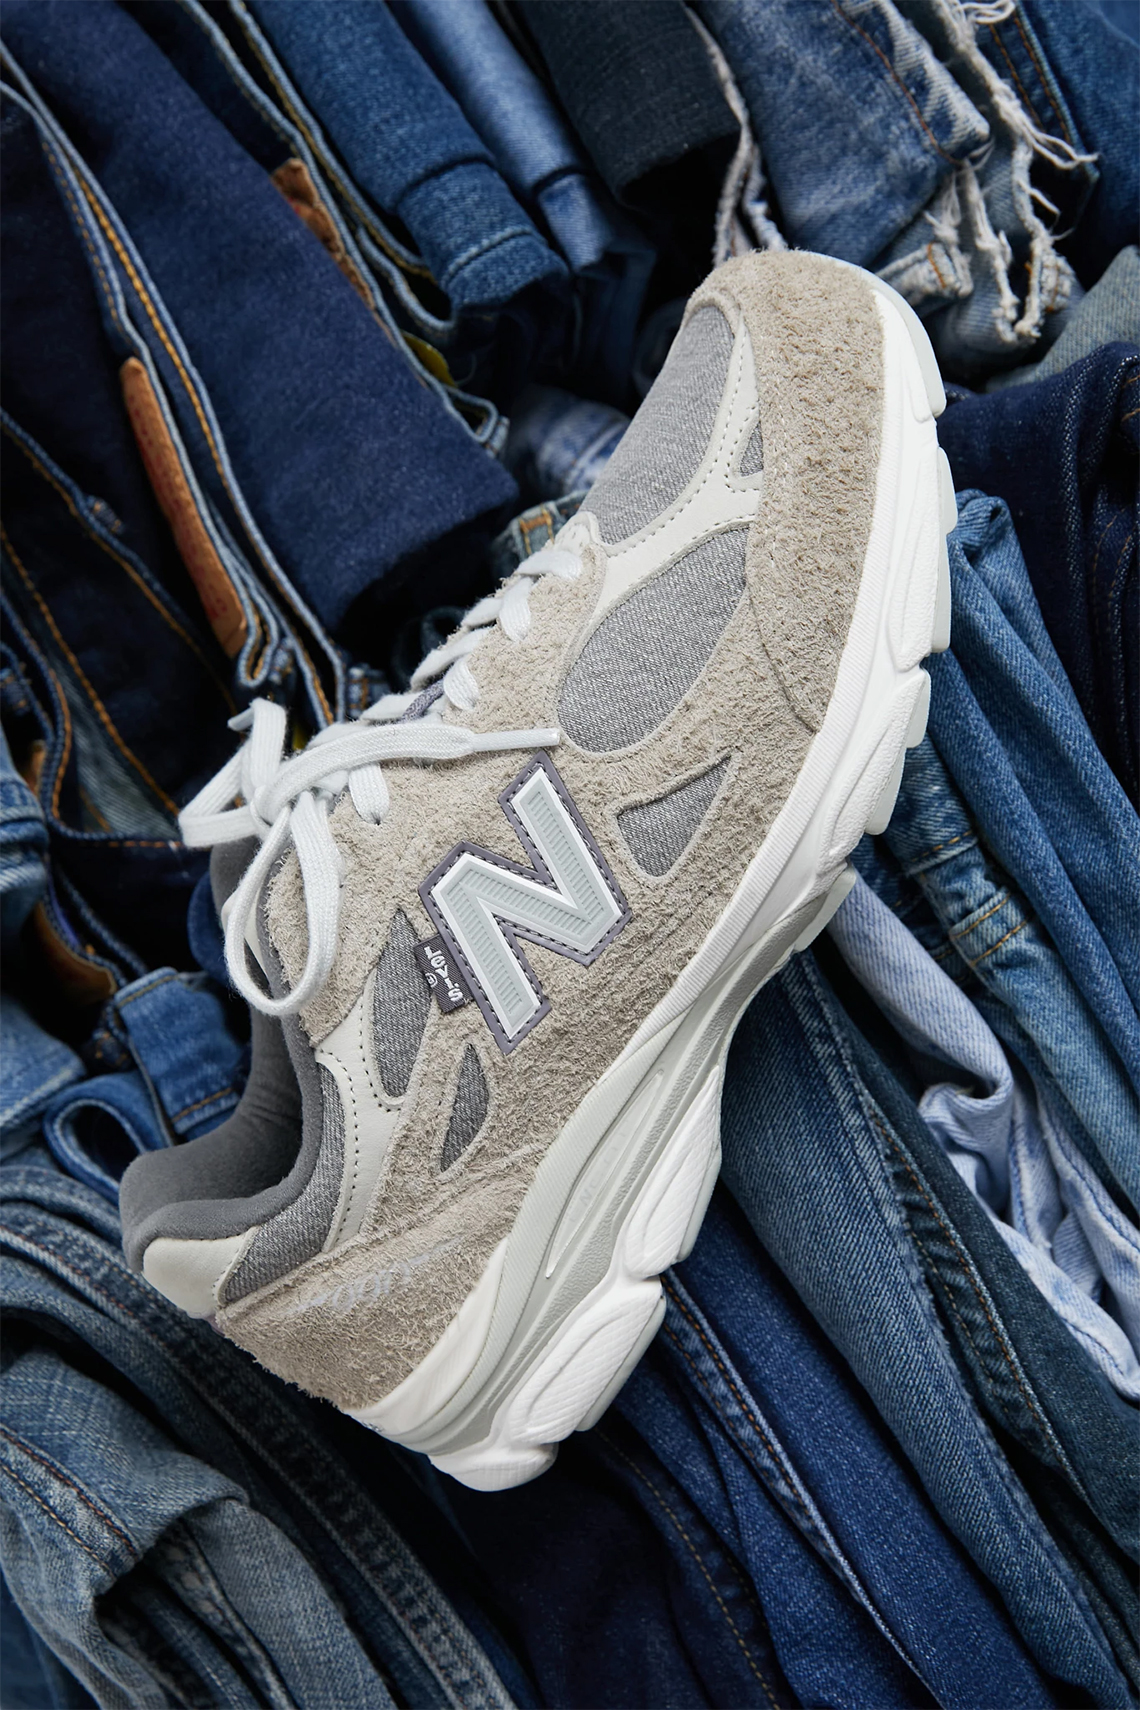 Levi's New Balance 990v3 Release Date | SneakerNews.com